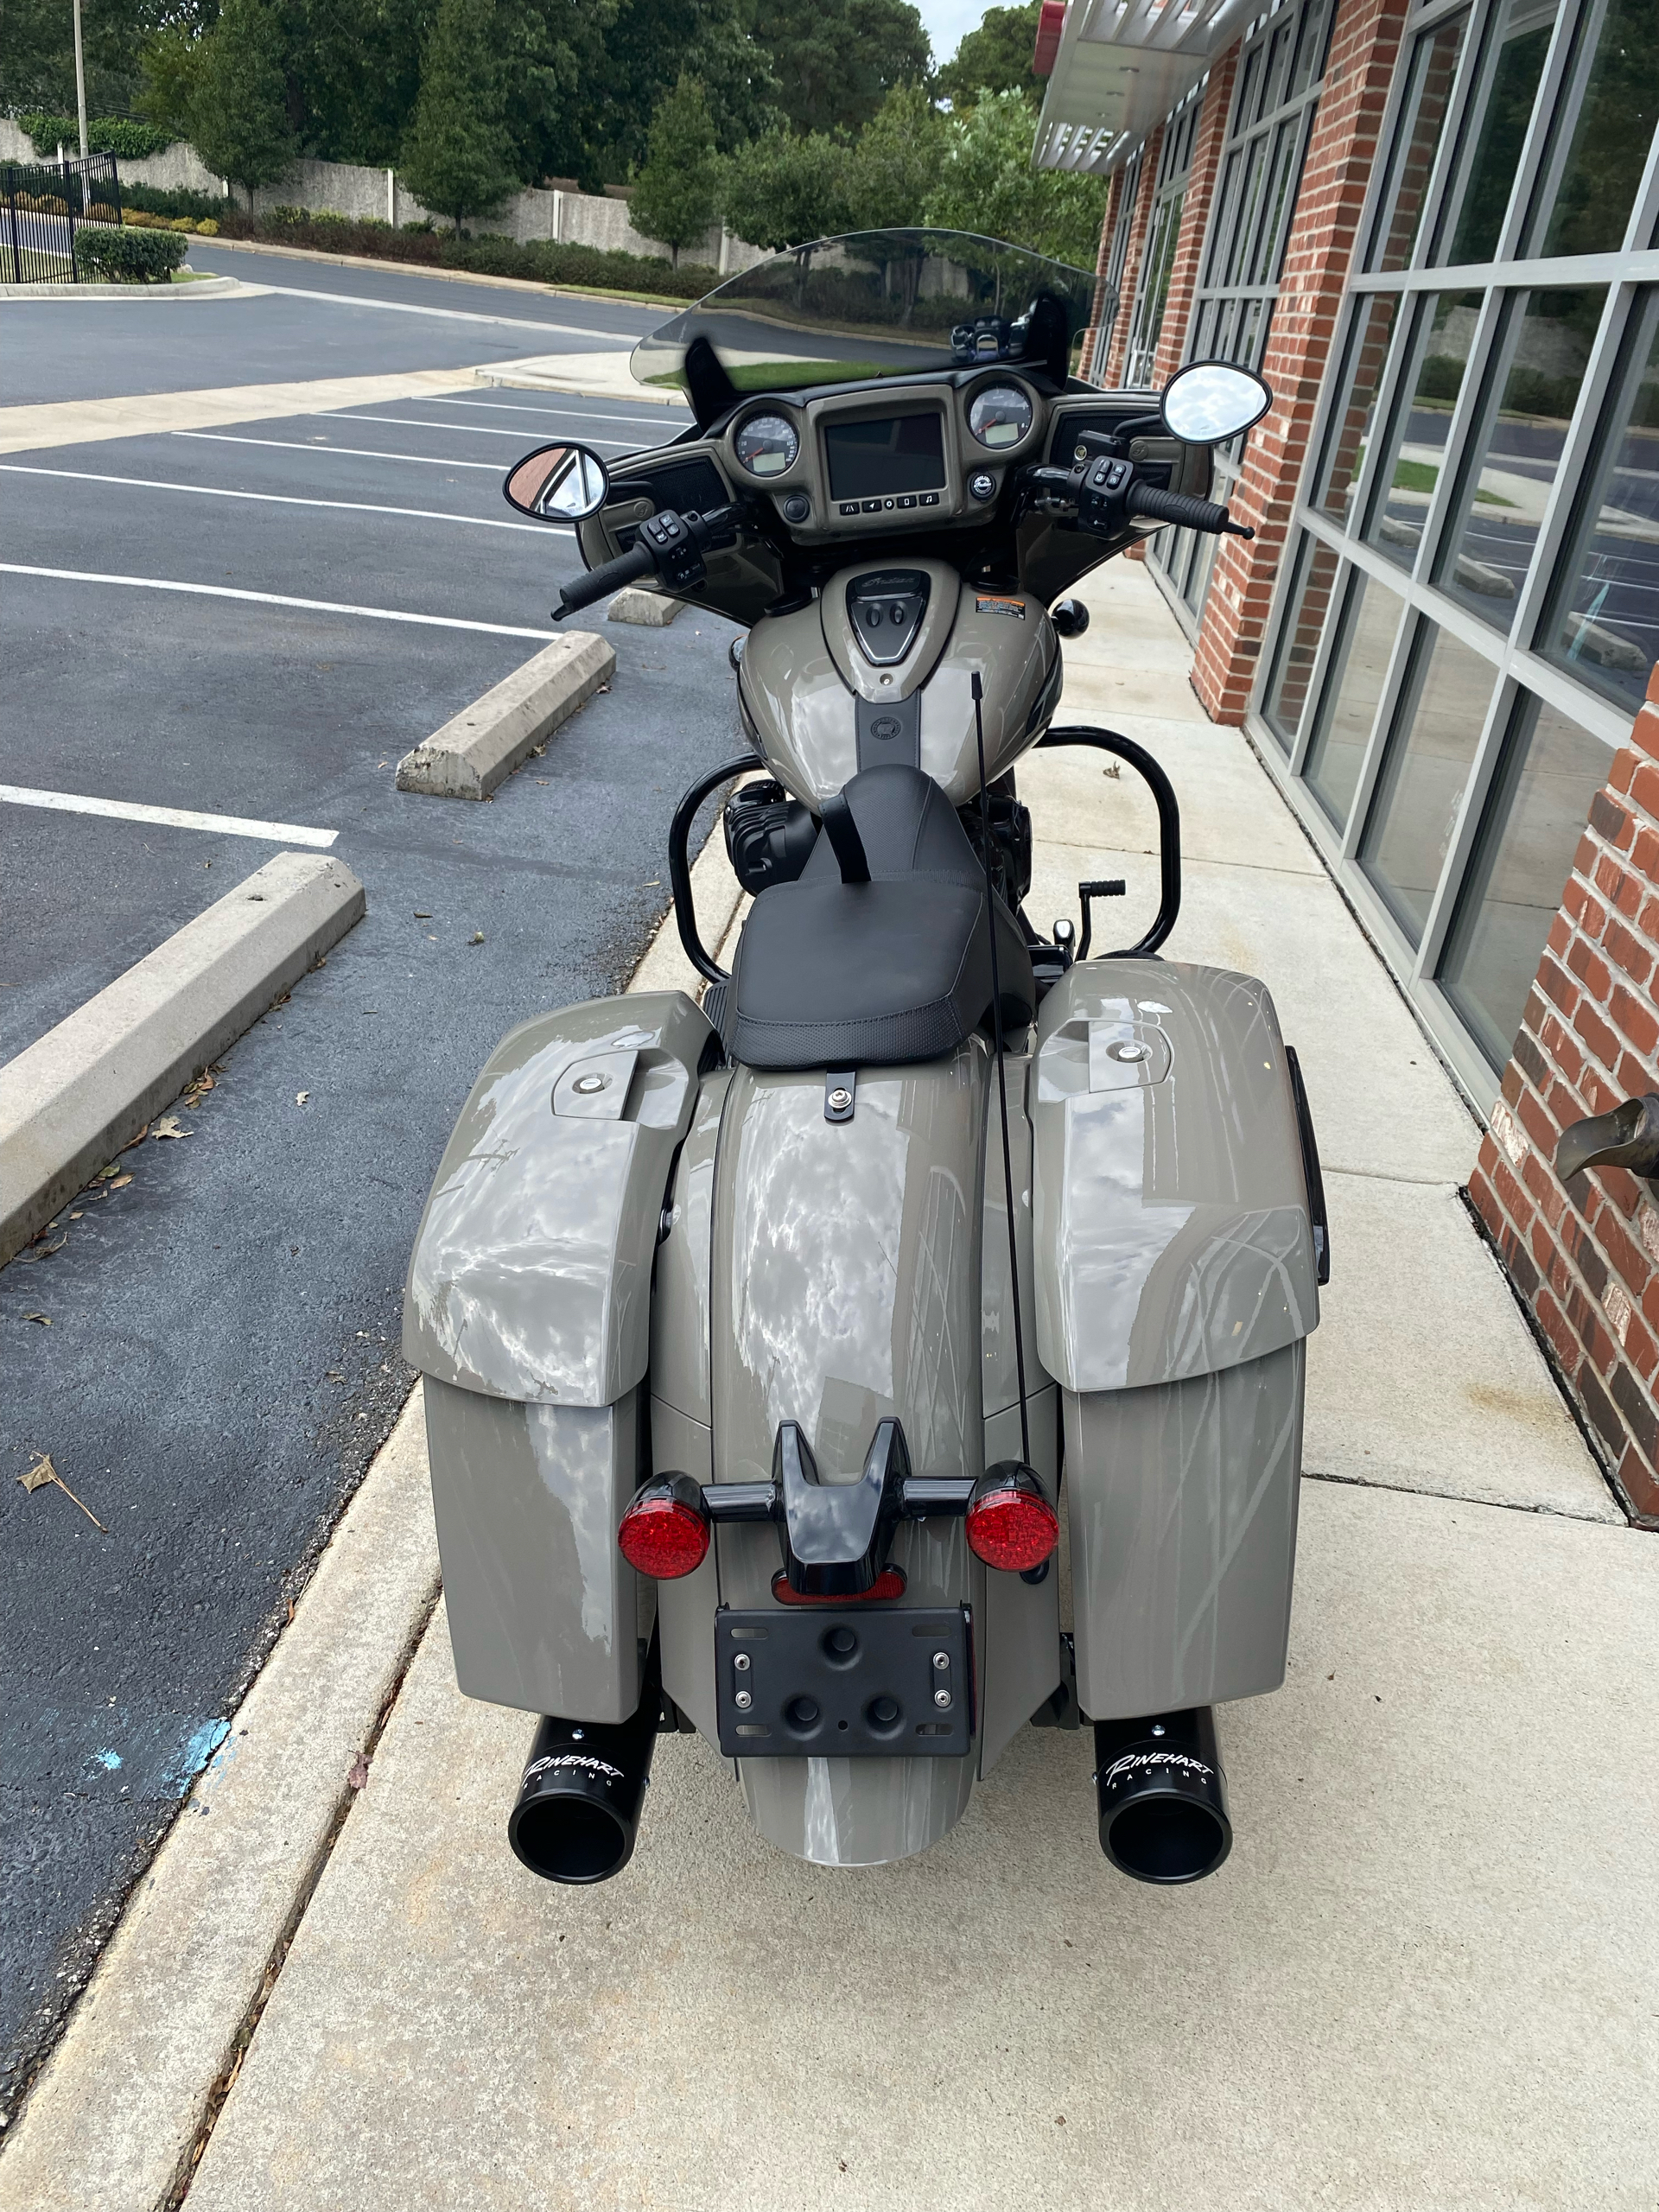 2022 Indian Motorcycle Chieftain® Dark Horse® in Newport News, Virginia - Photo 4